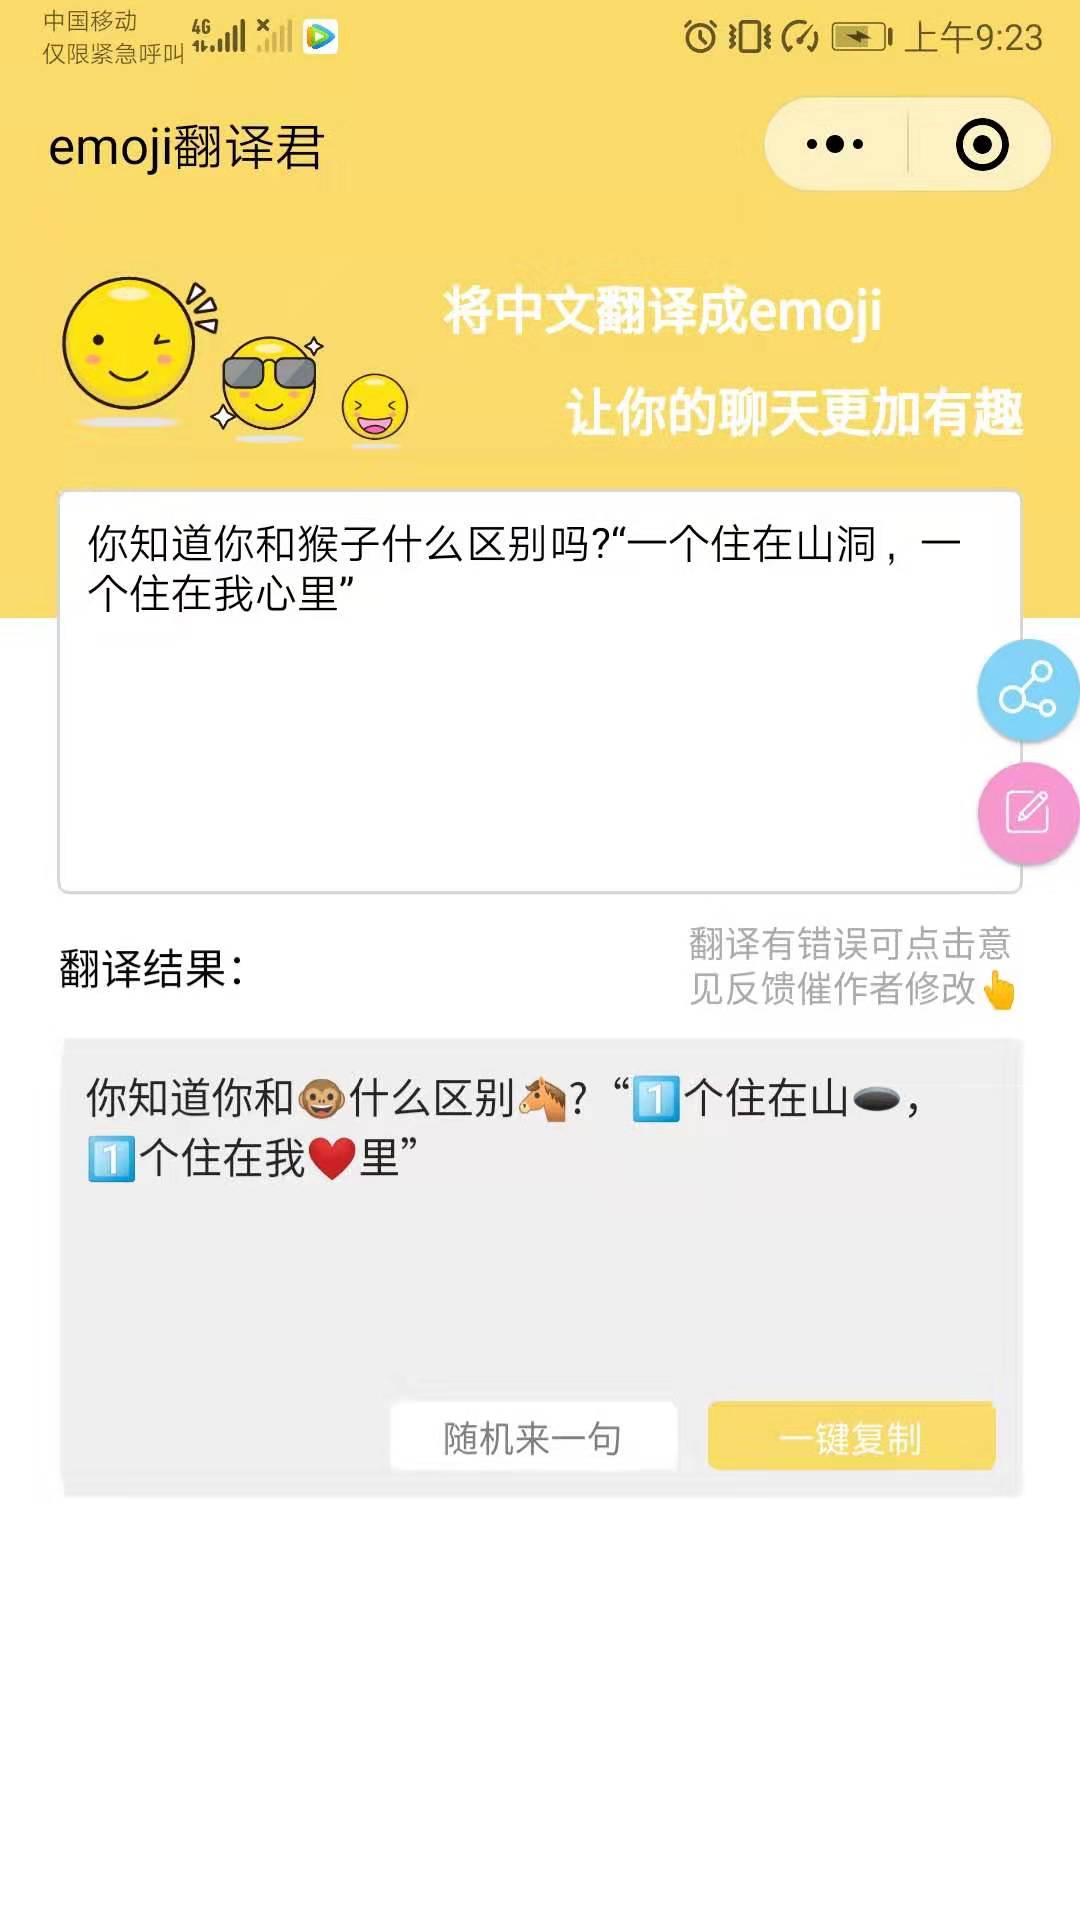 emoji翻译君_emoji翻译君小程序_emoji翻译君微信小程序